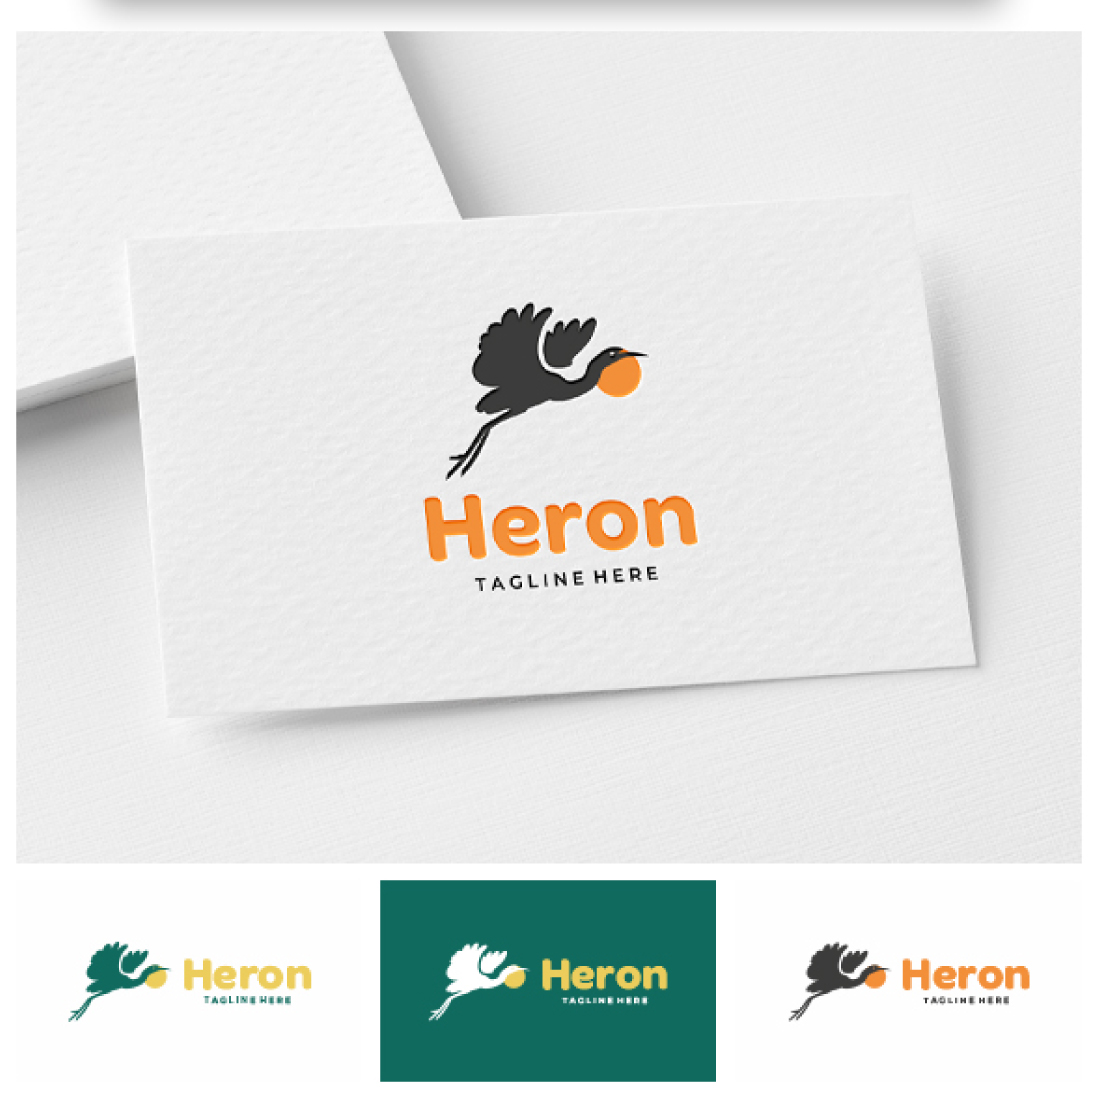 Heron Logo preview image.